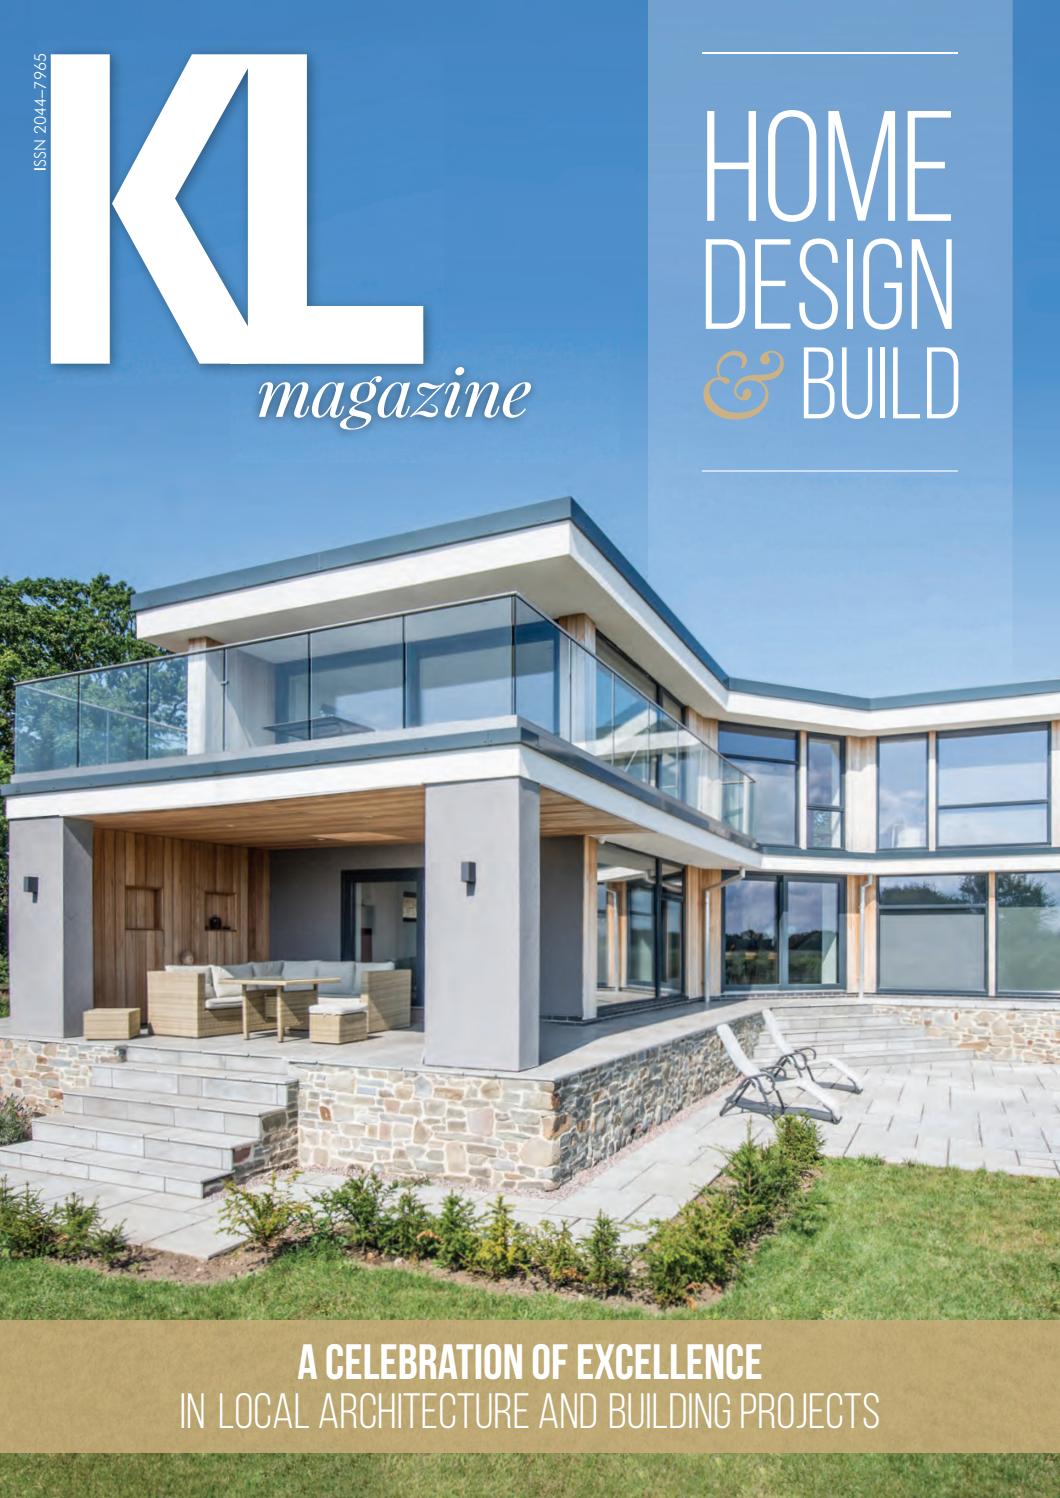 Pergola Aluminium En Kit Brico Depot Nouveau Kl Magazine Home Design & Build 2019 20 by Kl Magazine issuu